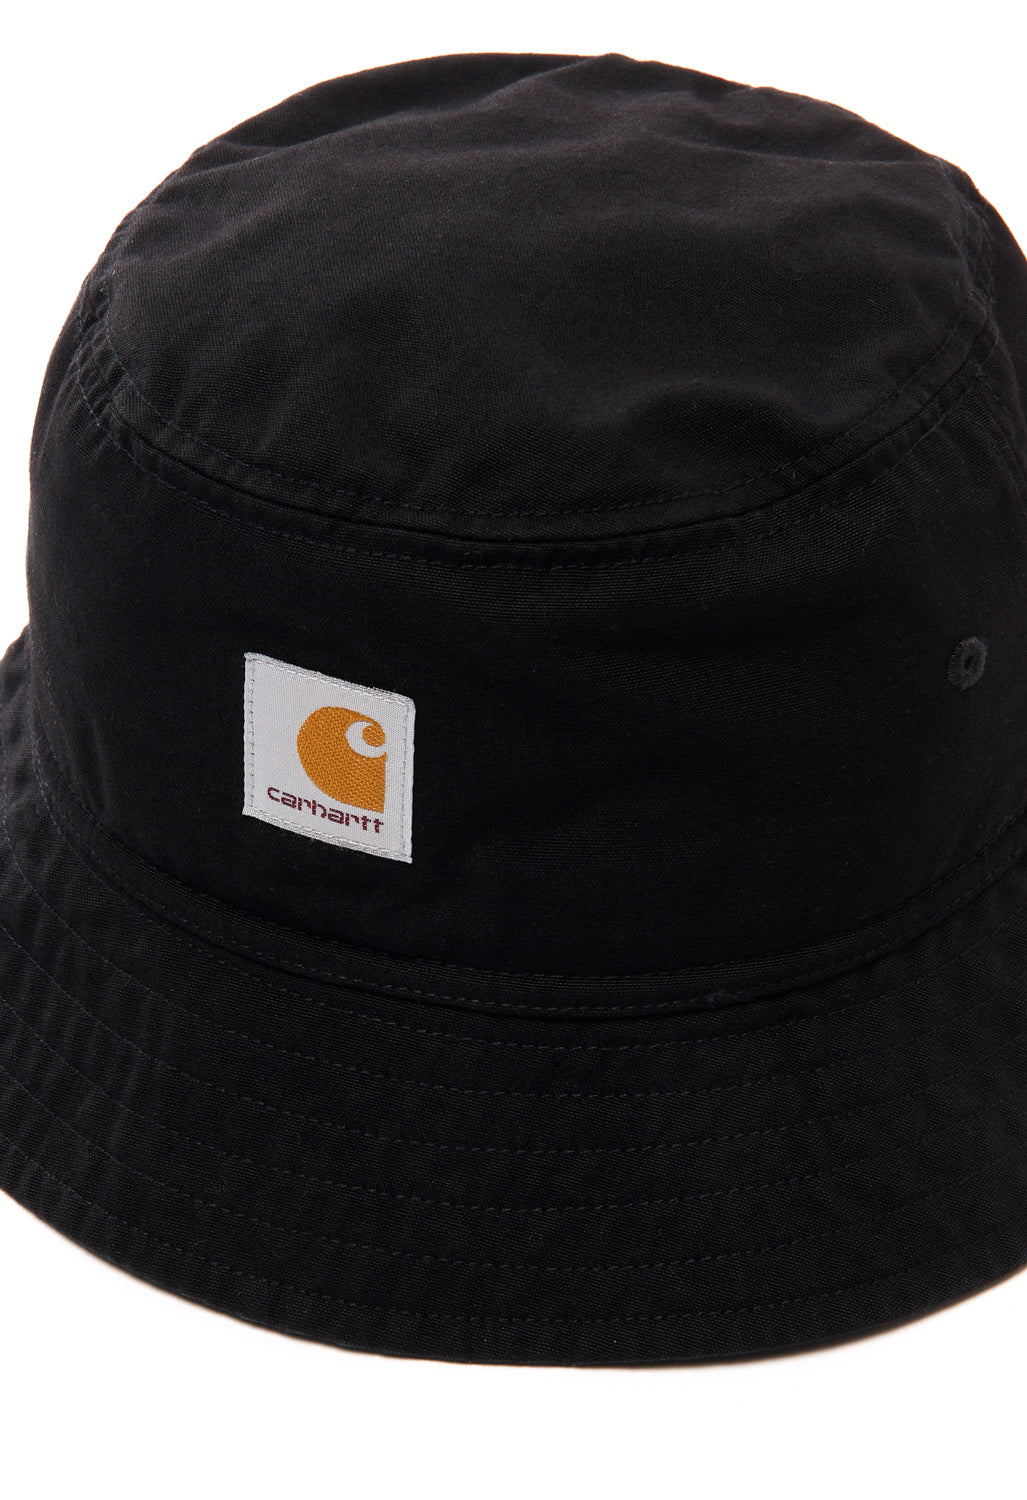 Carhartt WIP Heston Bucket Hat - Black/Discovery Green